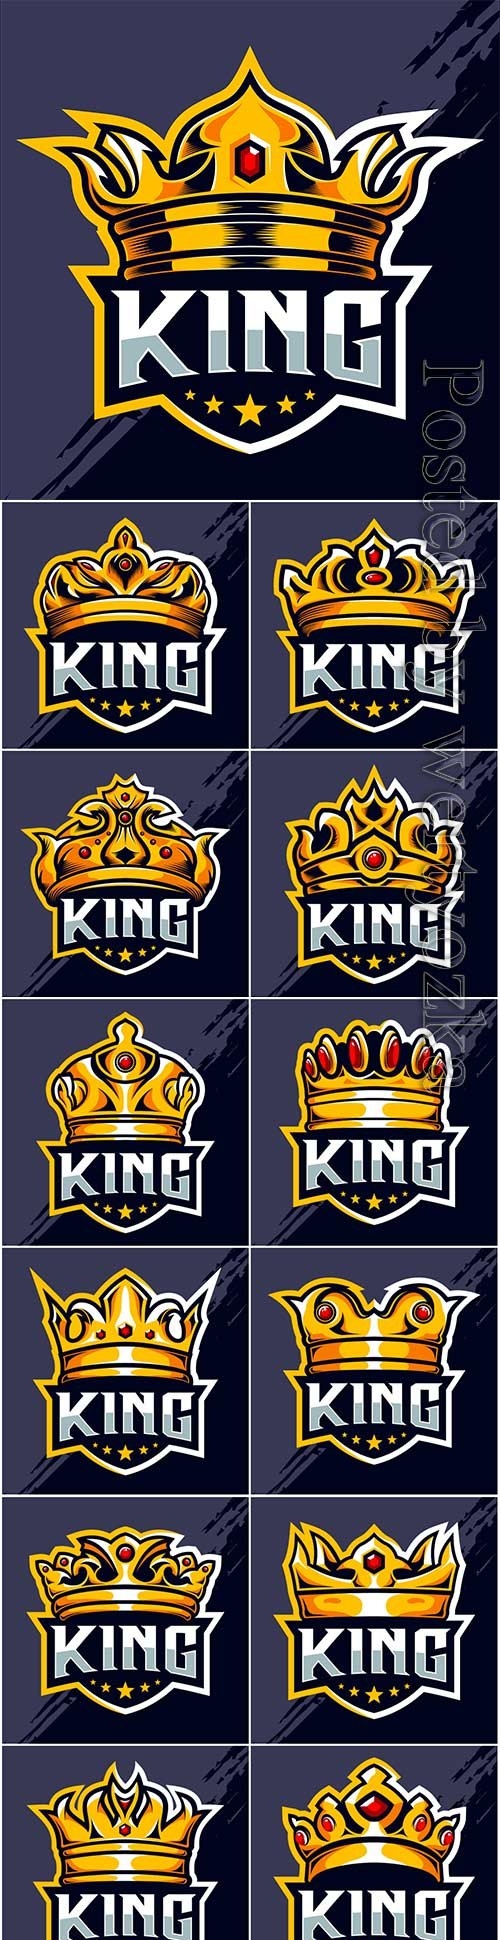 King crown esport logo design premium vector